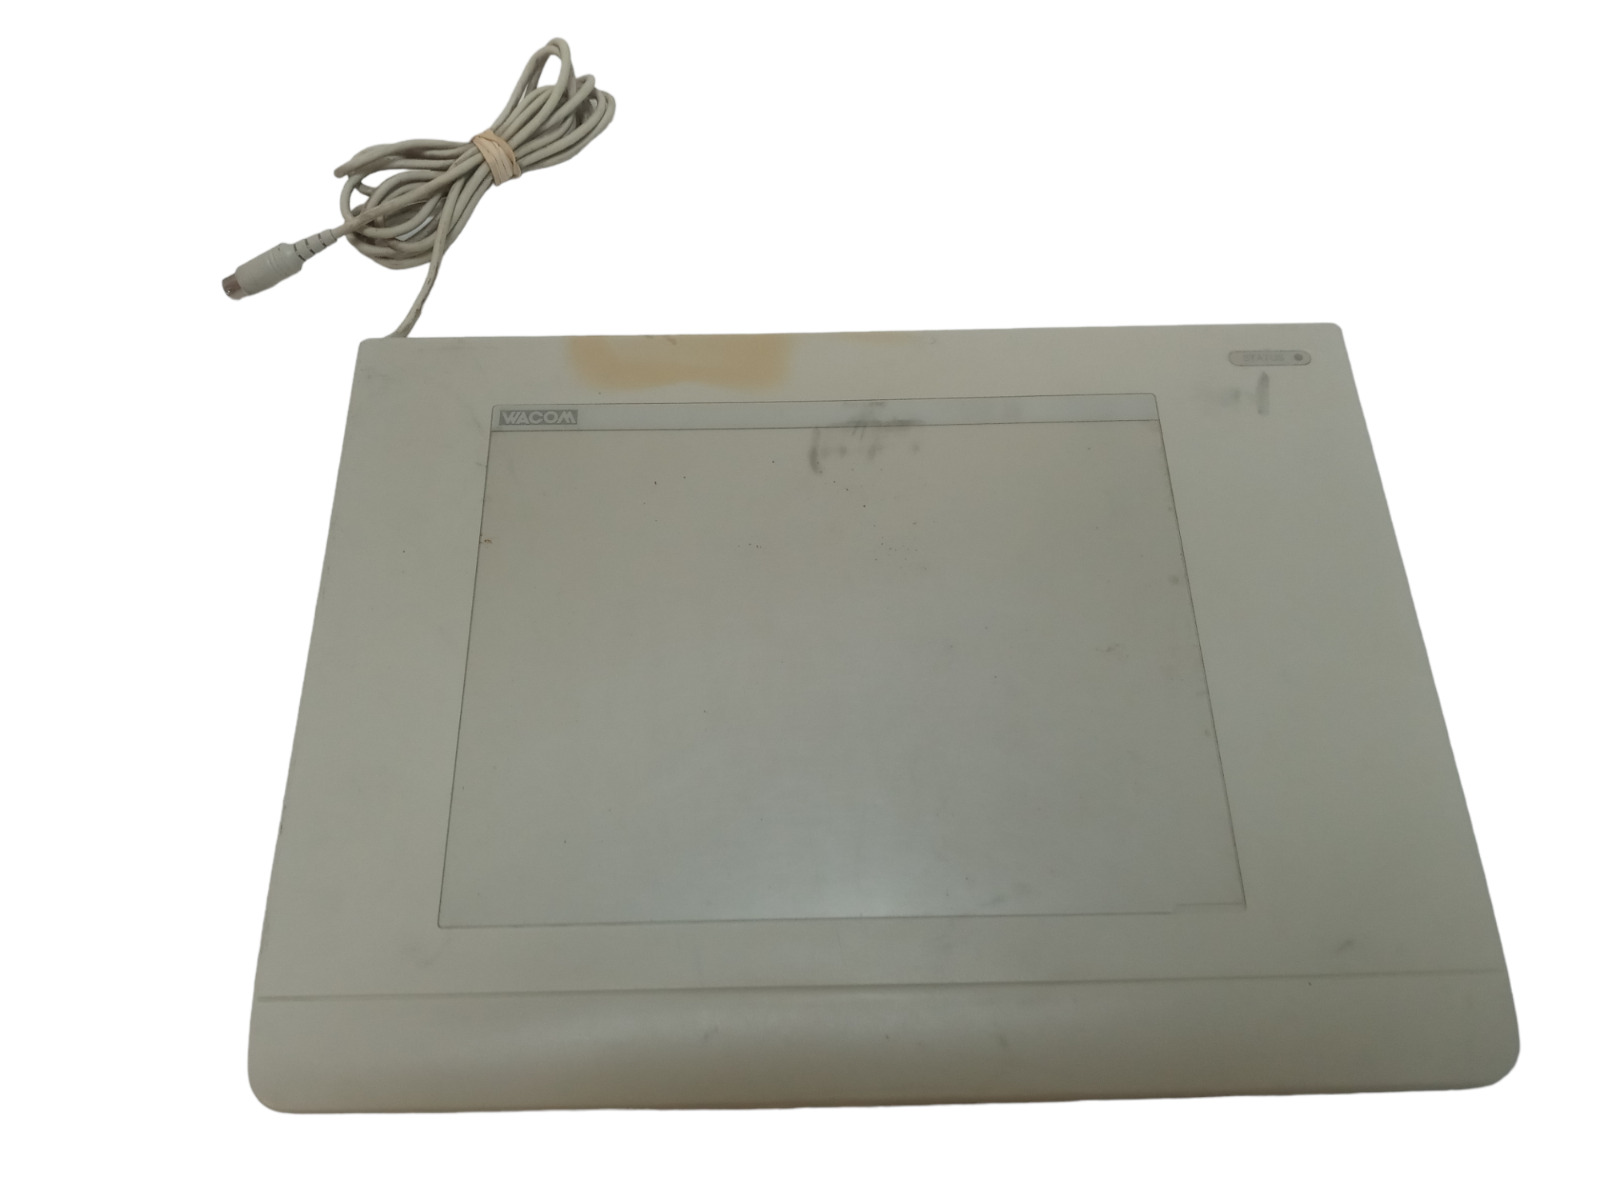 Vintage Wacom UD-0608-A Digitizer II ADB Graphics Drawing Tablet for Macintosh